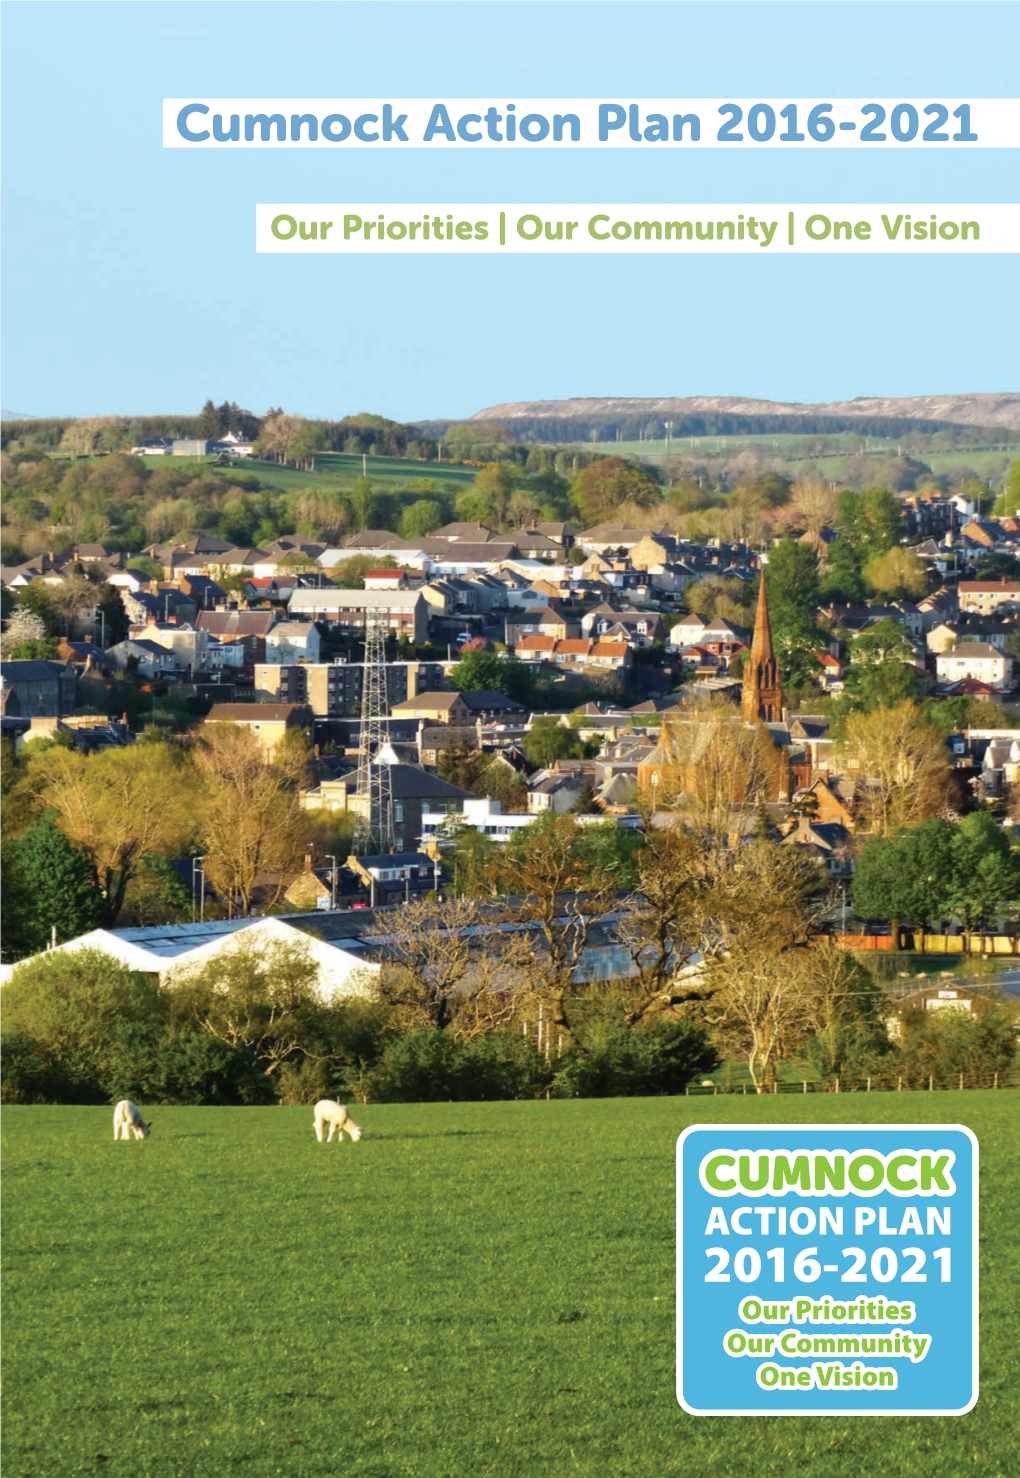 Cumnock Action Plan 2016-2021